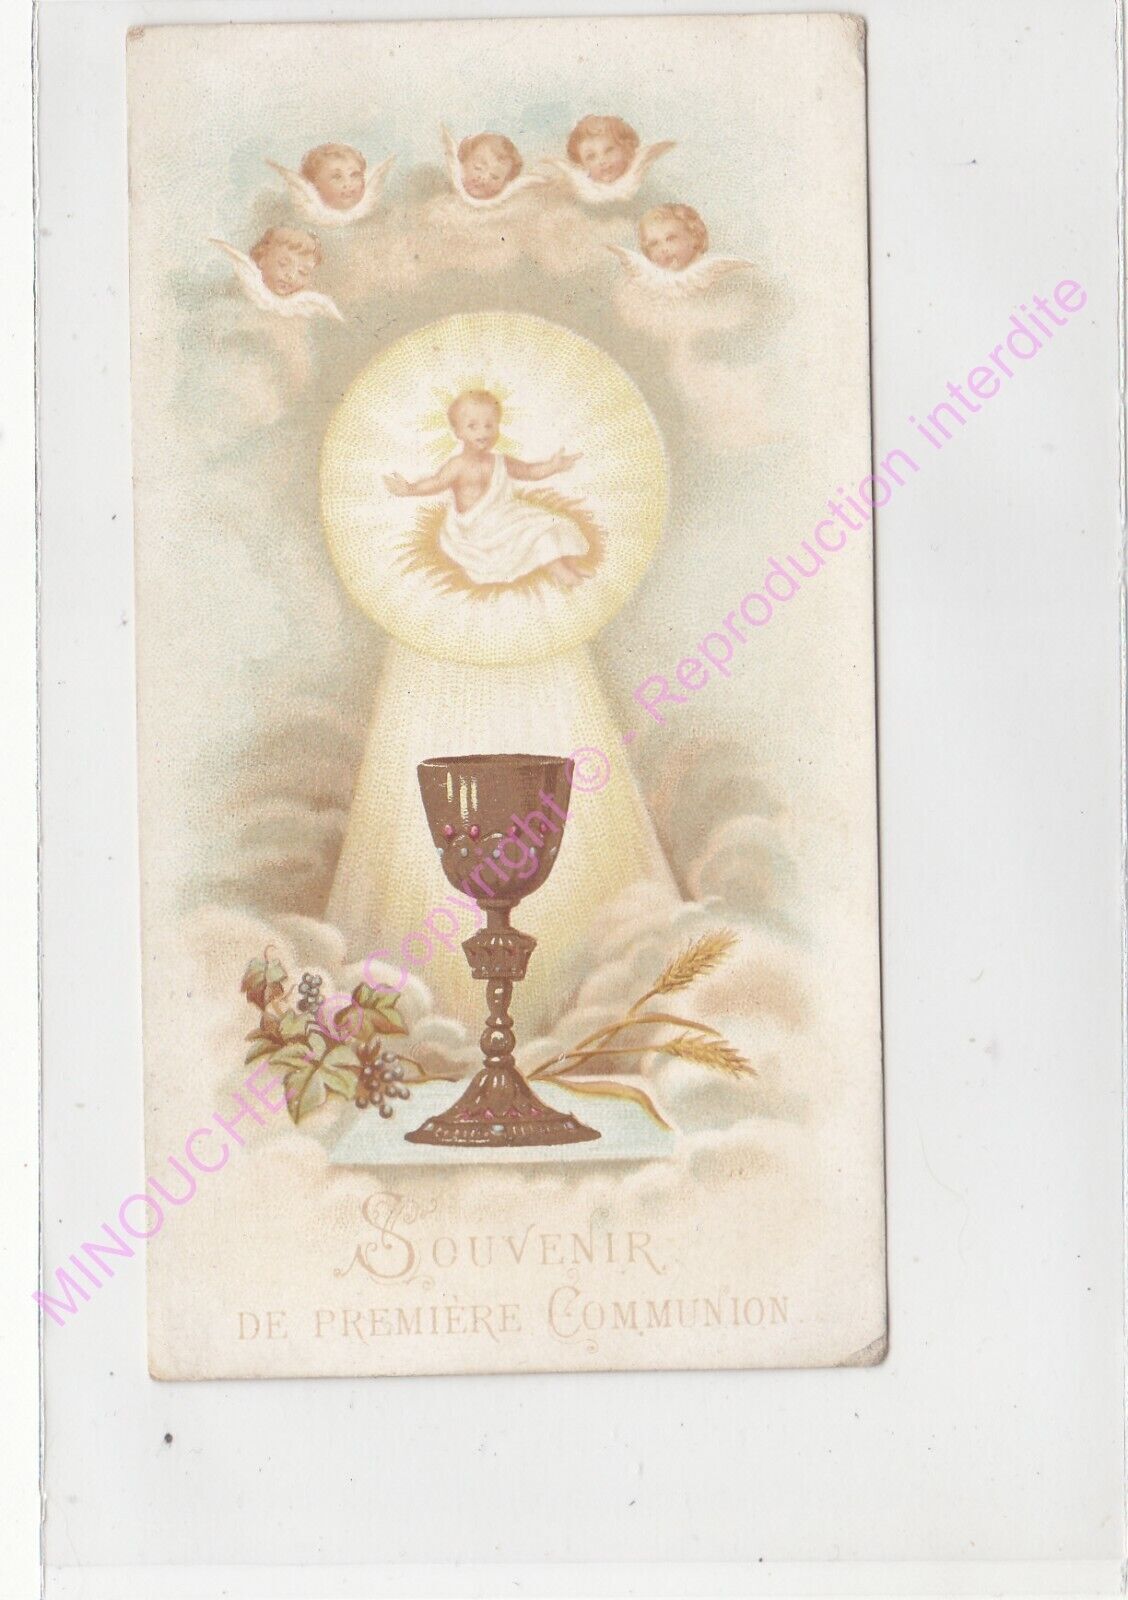 Image Pious Christianity Remember Première Communion Angels Cherubs 1896